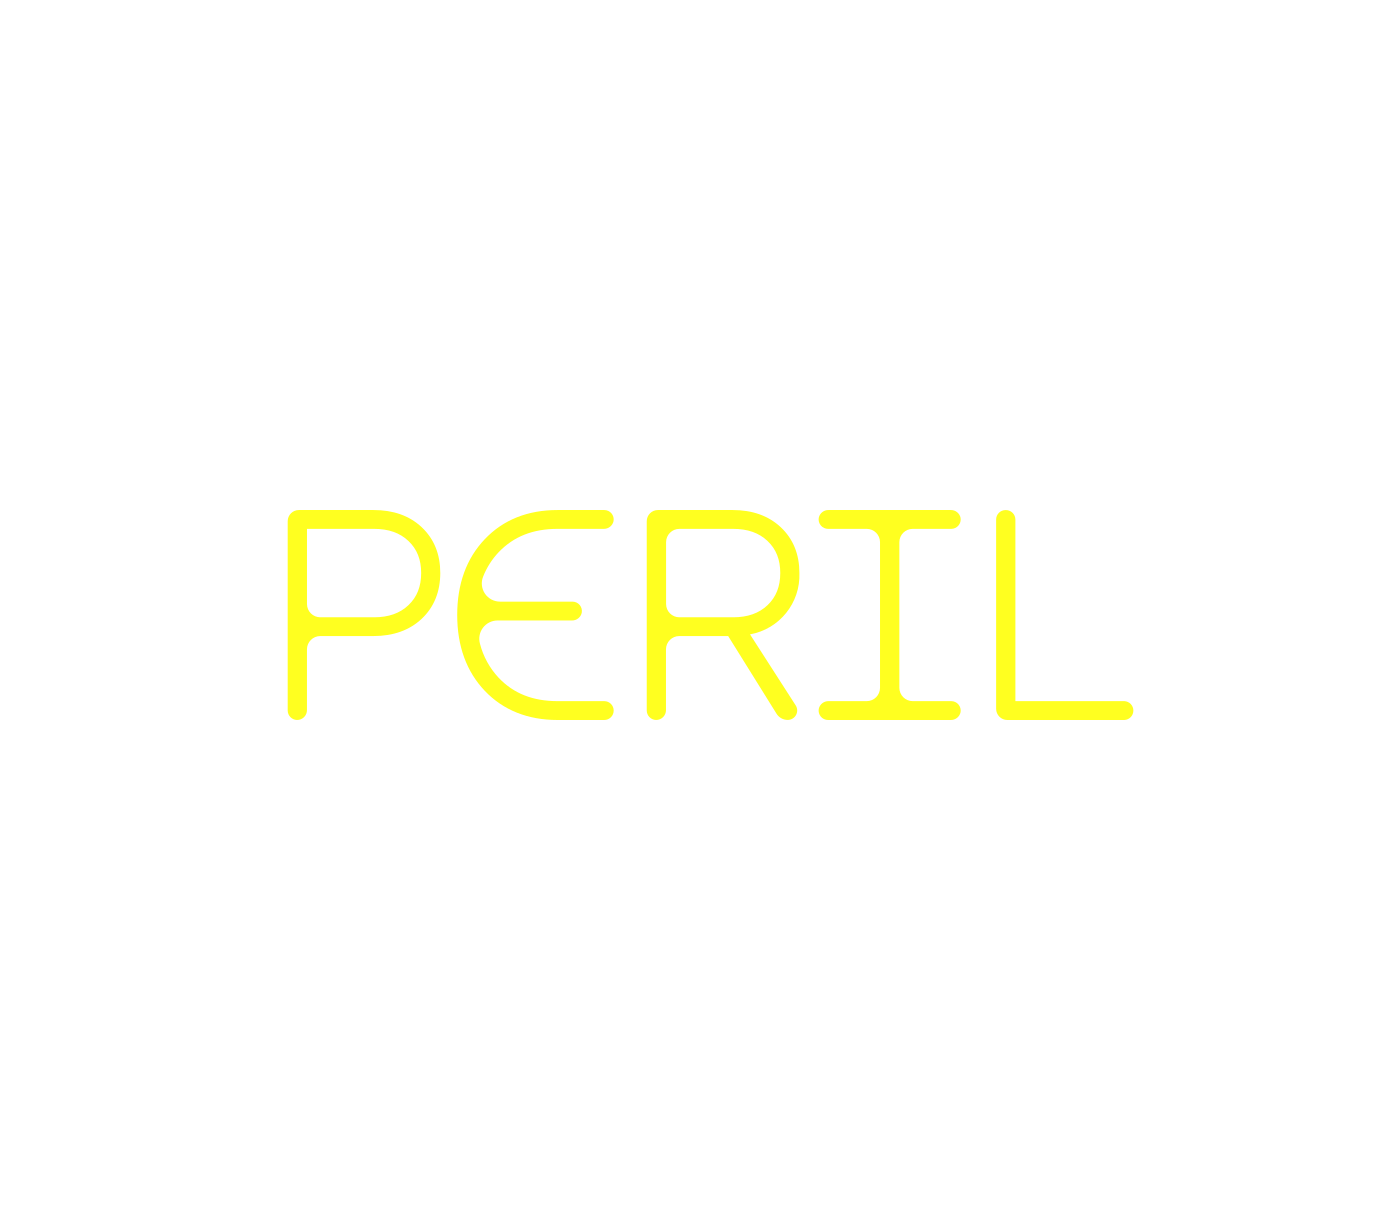 Model Peril Sounds